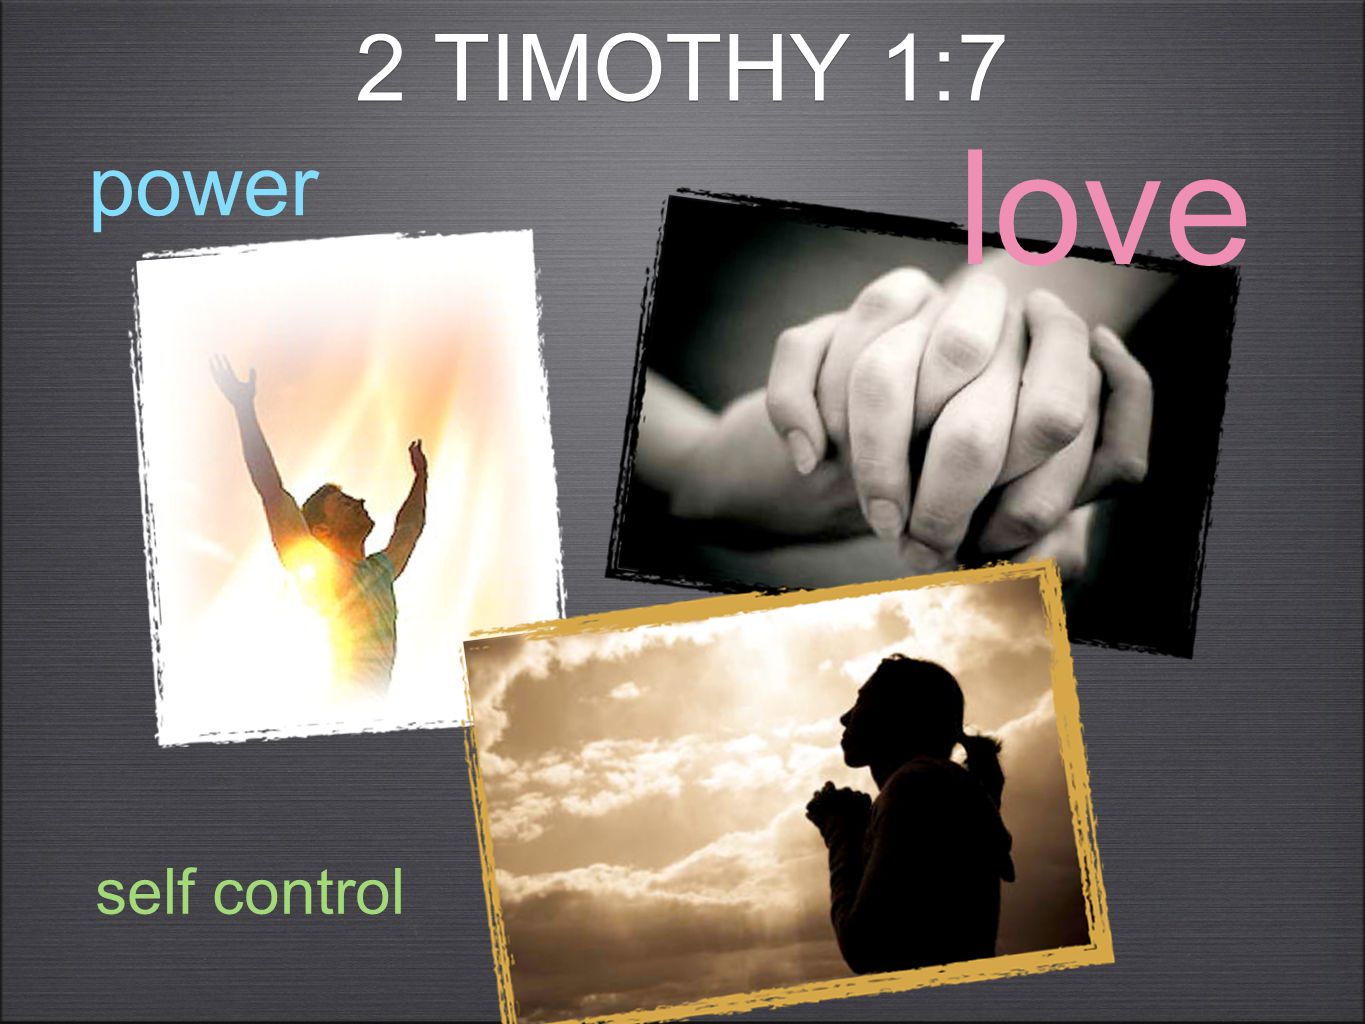 power self control love